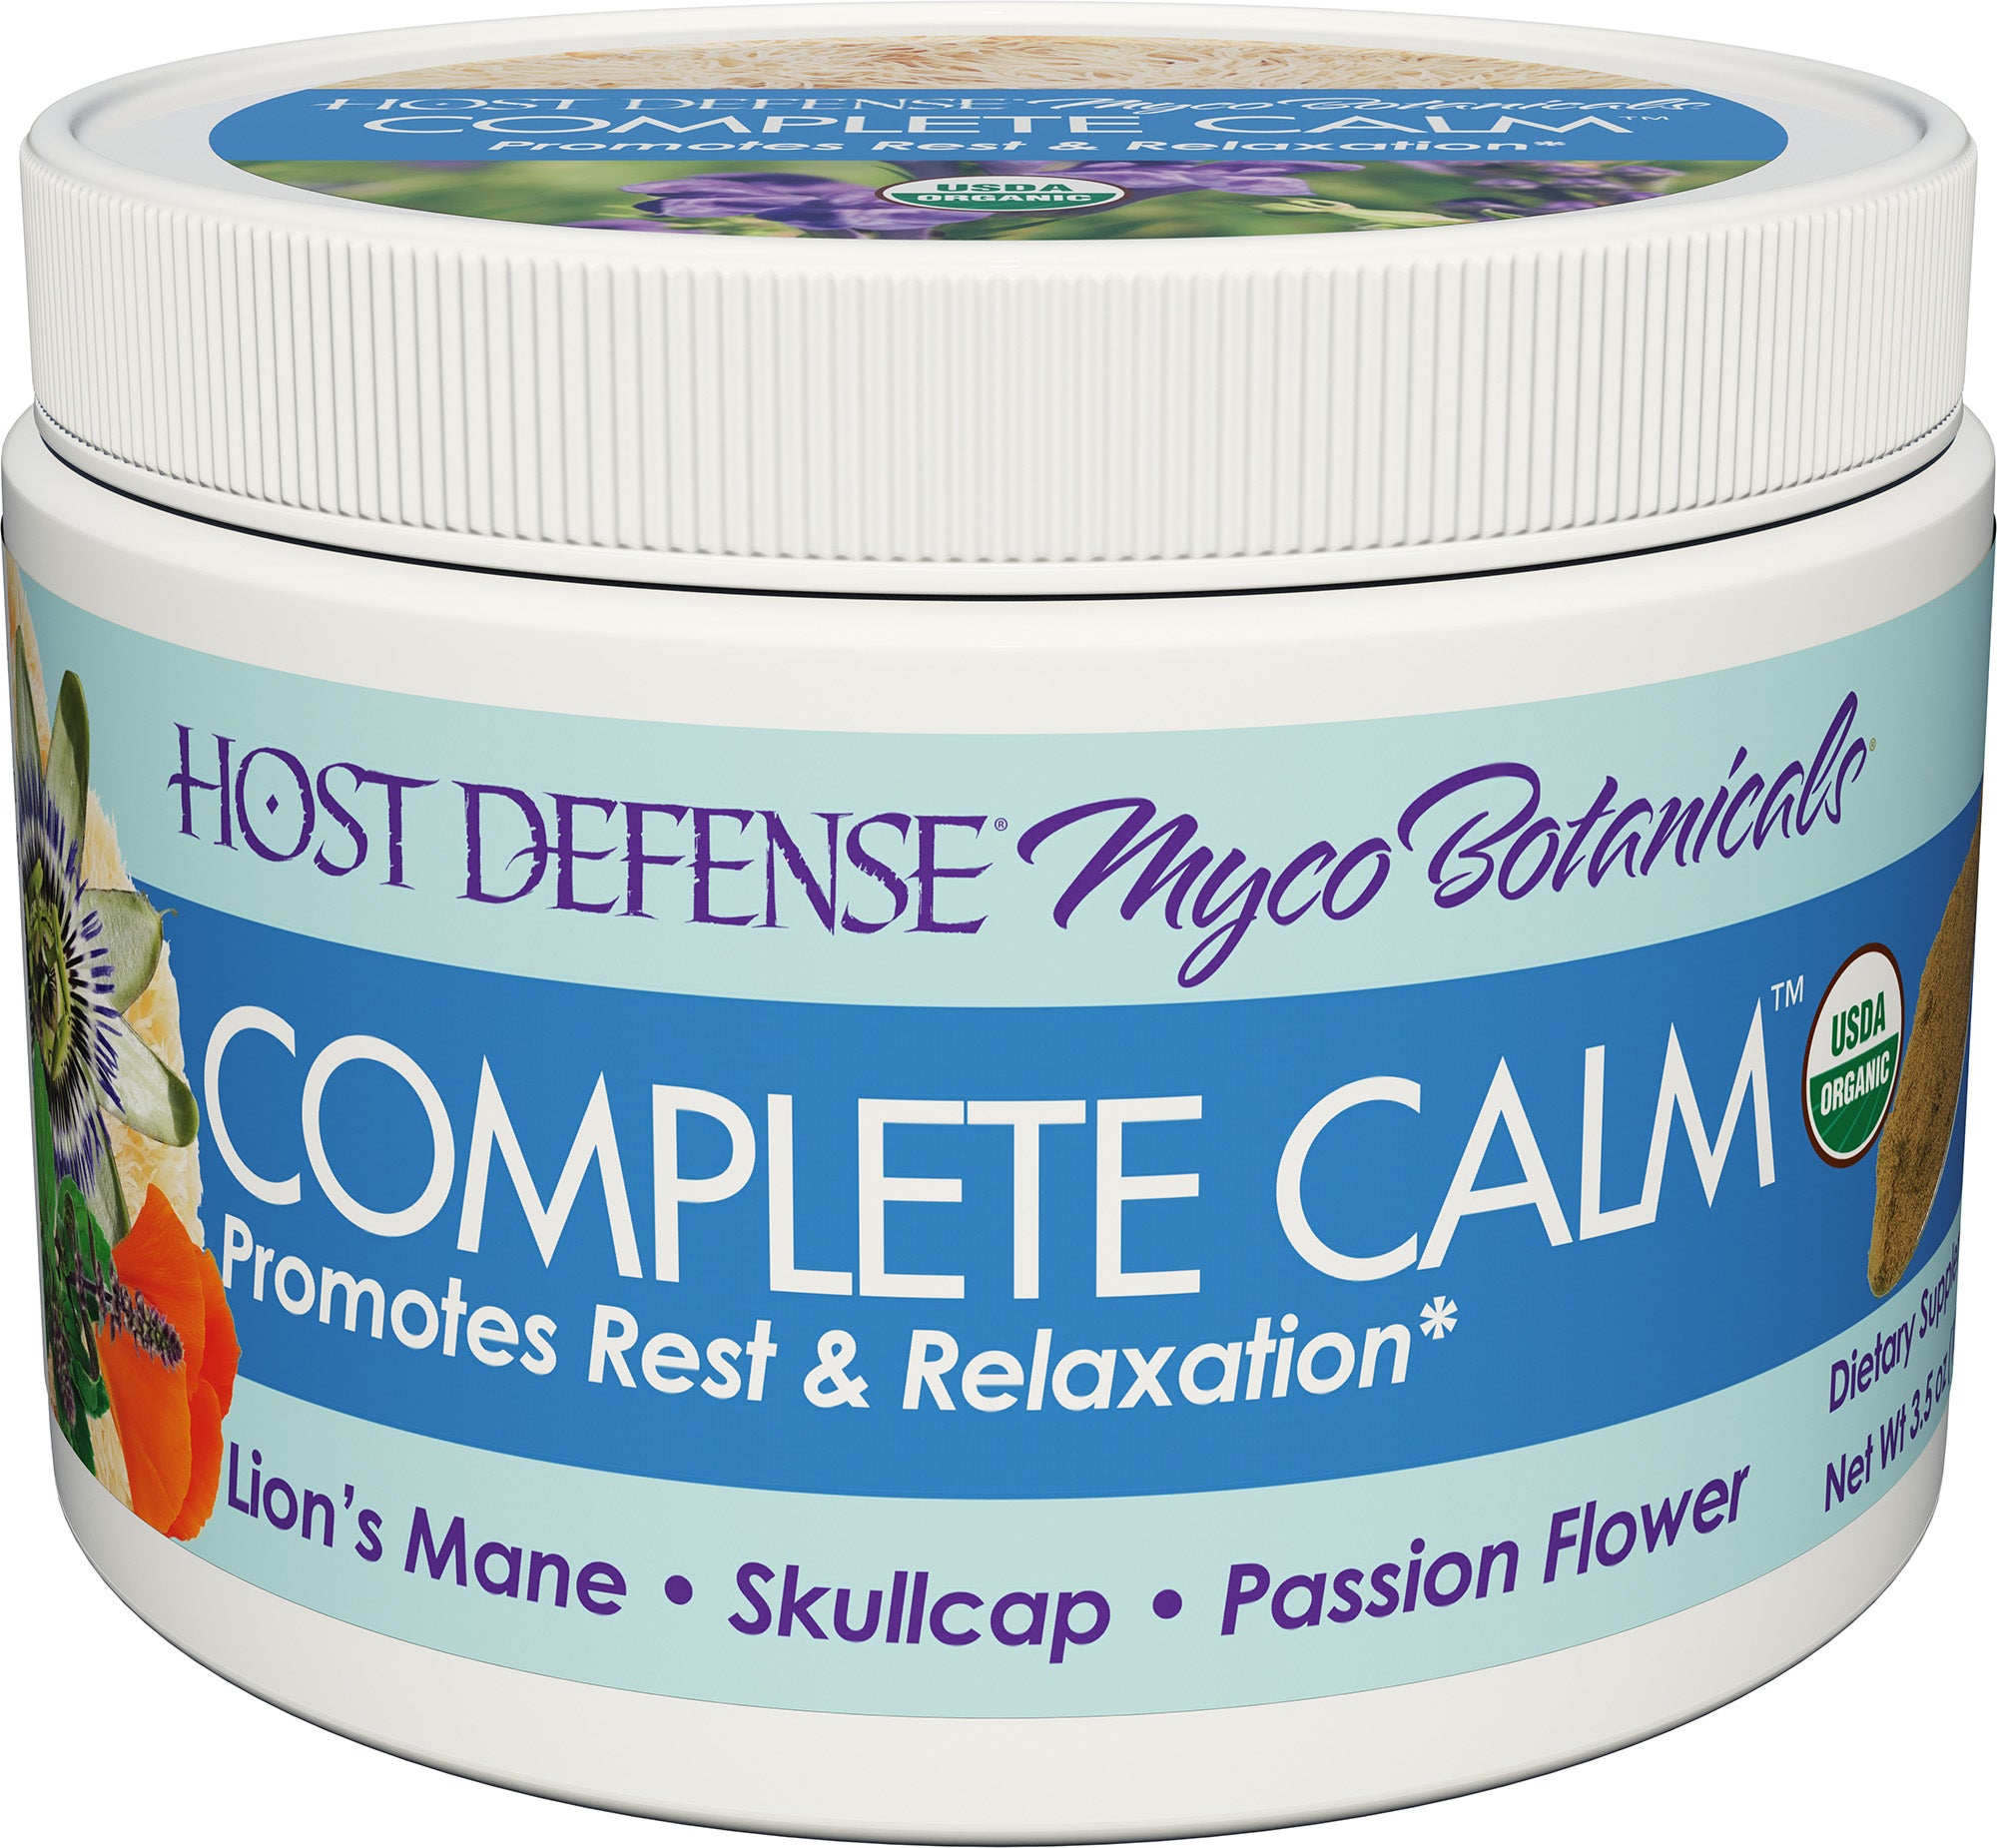 MycoBotanicals® Complete Calm™ Powder